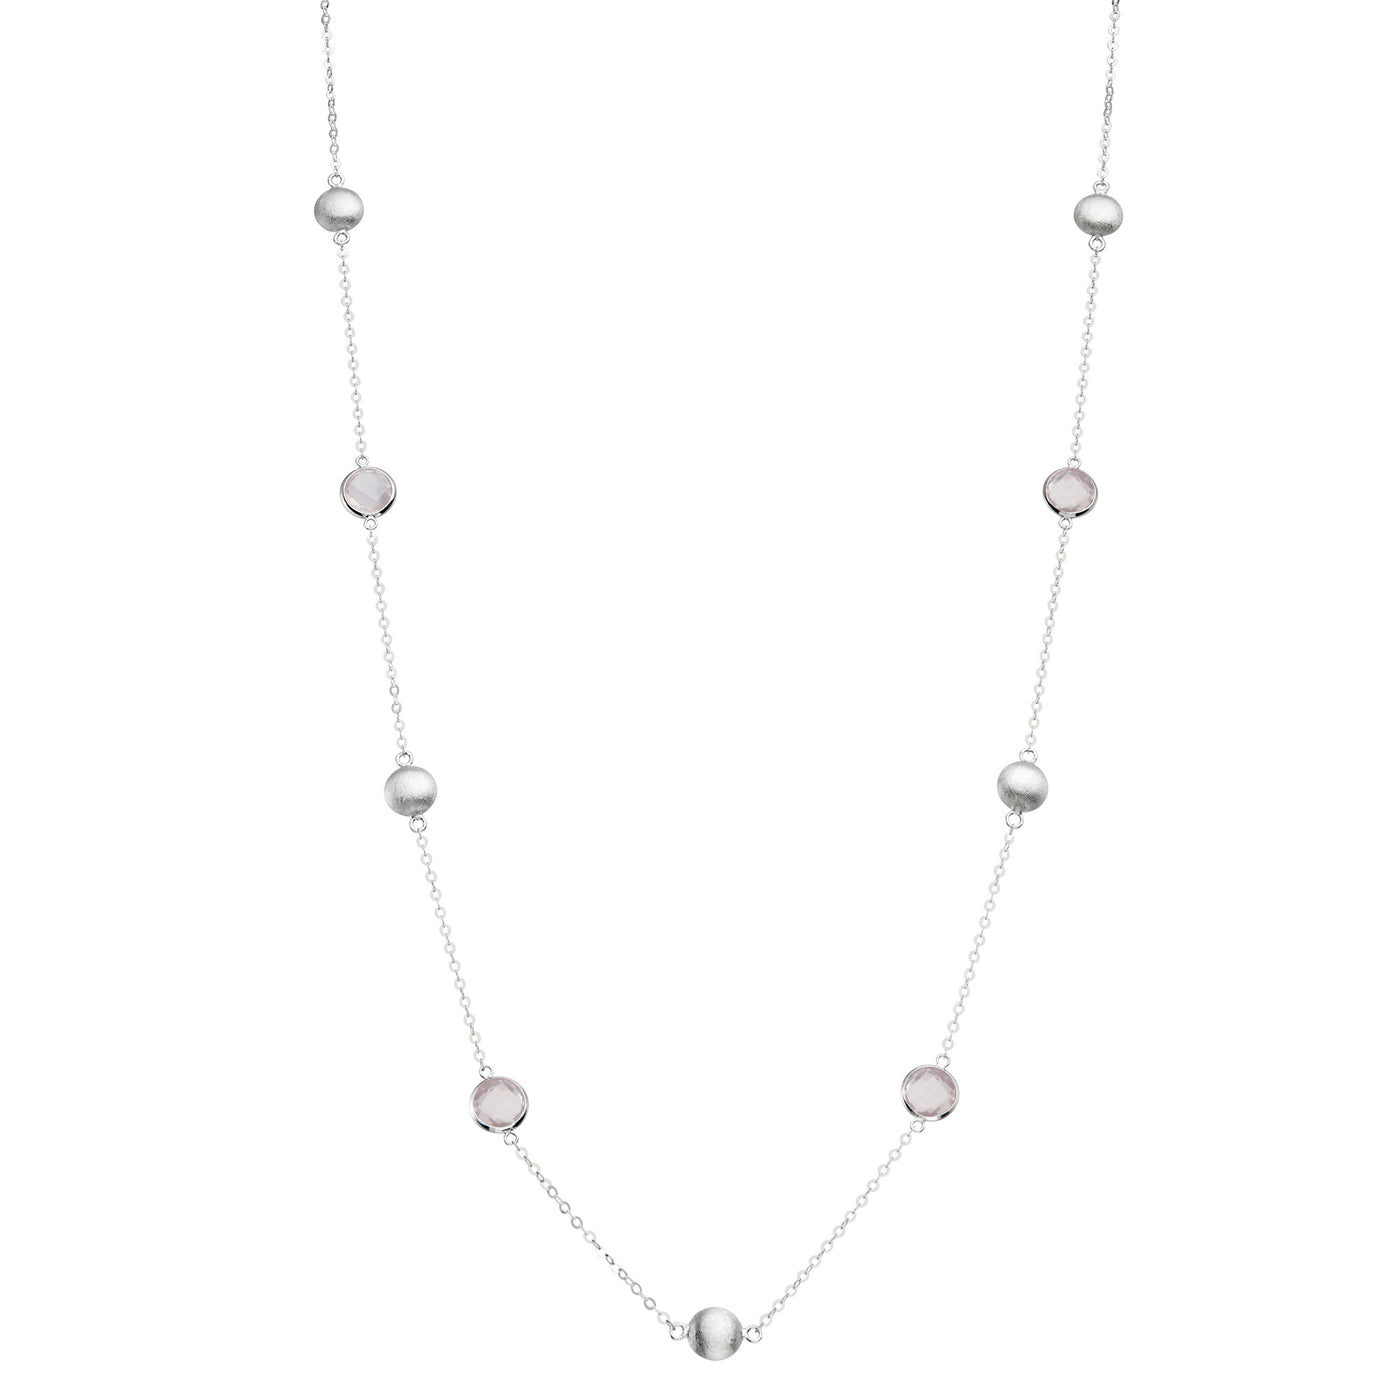 Rebecca Sloane Silver Bezel Station and Rose Quartz Necklace